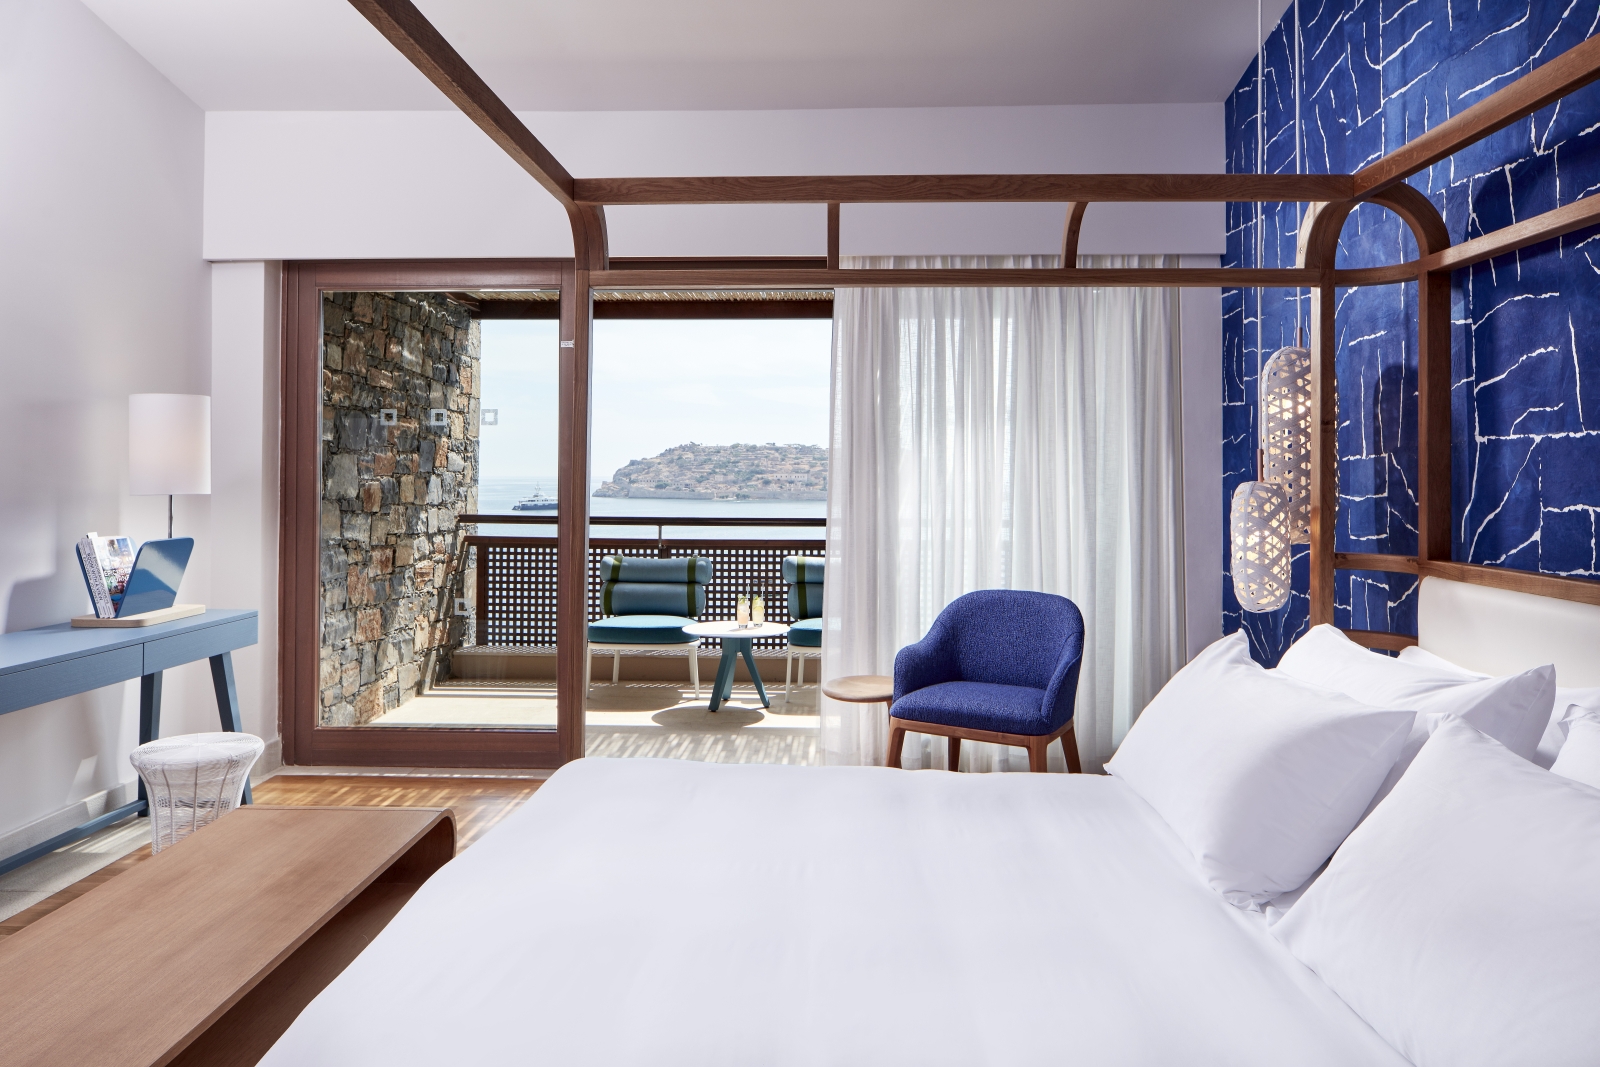 Island Luxury Suite Bedroom with terrace